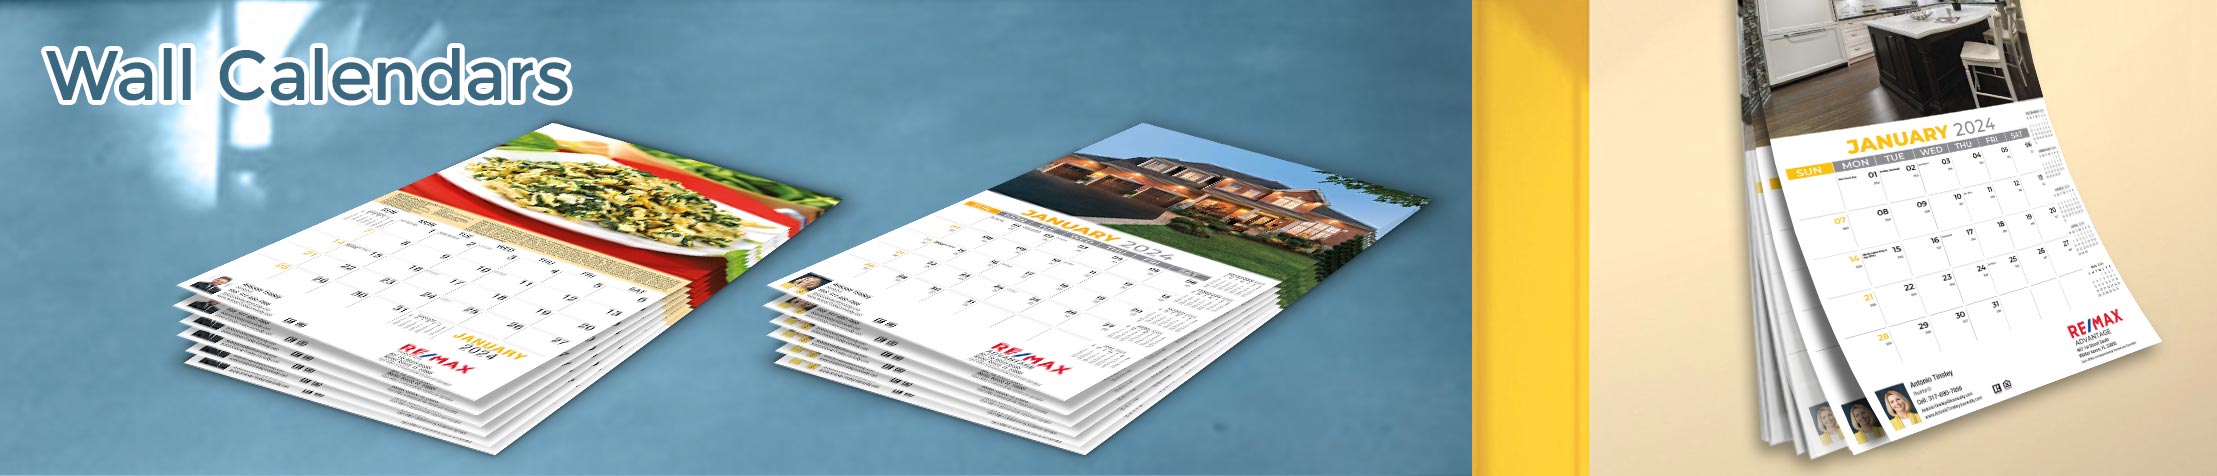 RE/MAX Real Estate Wall Calendars - RE/MAX  2019 wall calendars | BestPrintBuy.com